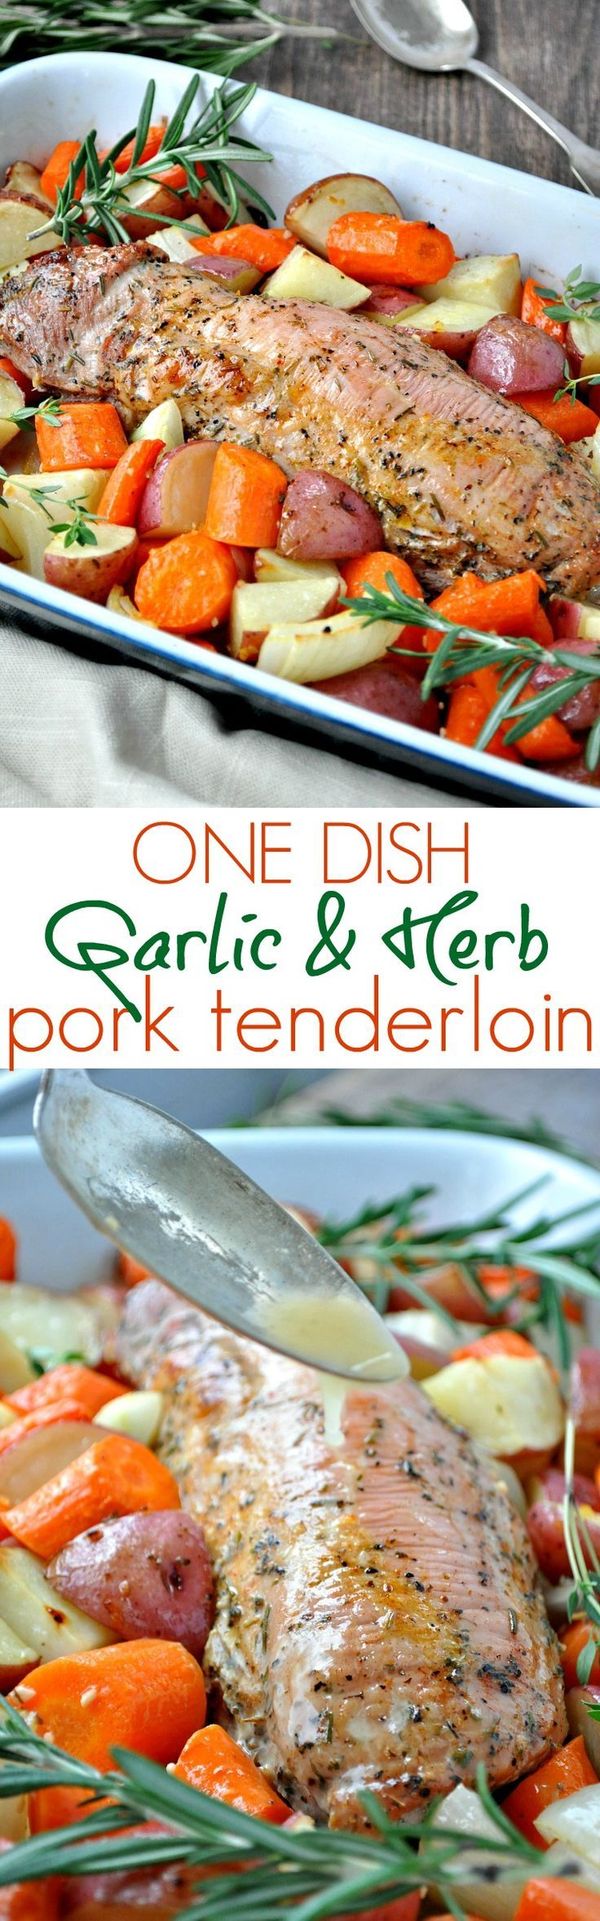 One Dish Garlic & Herb Pork Tenderloin